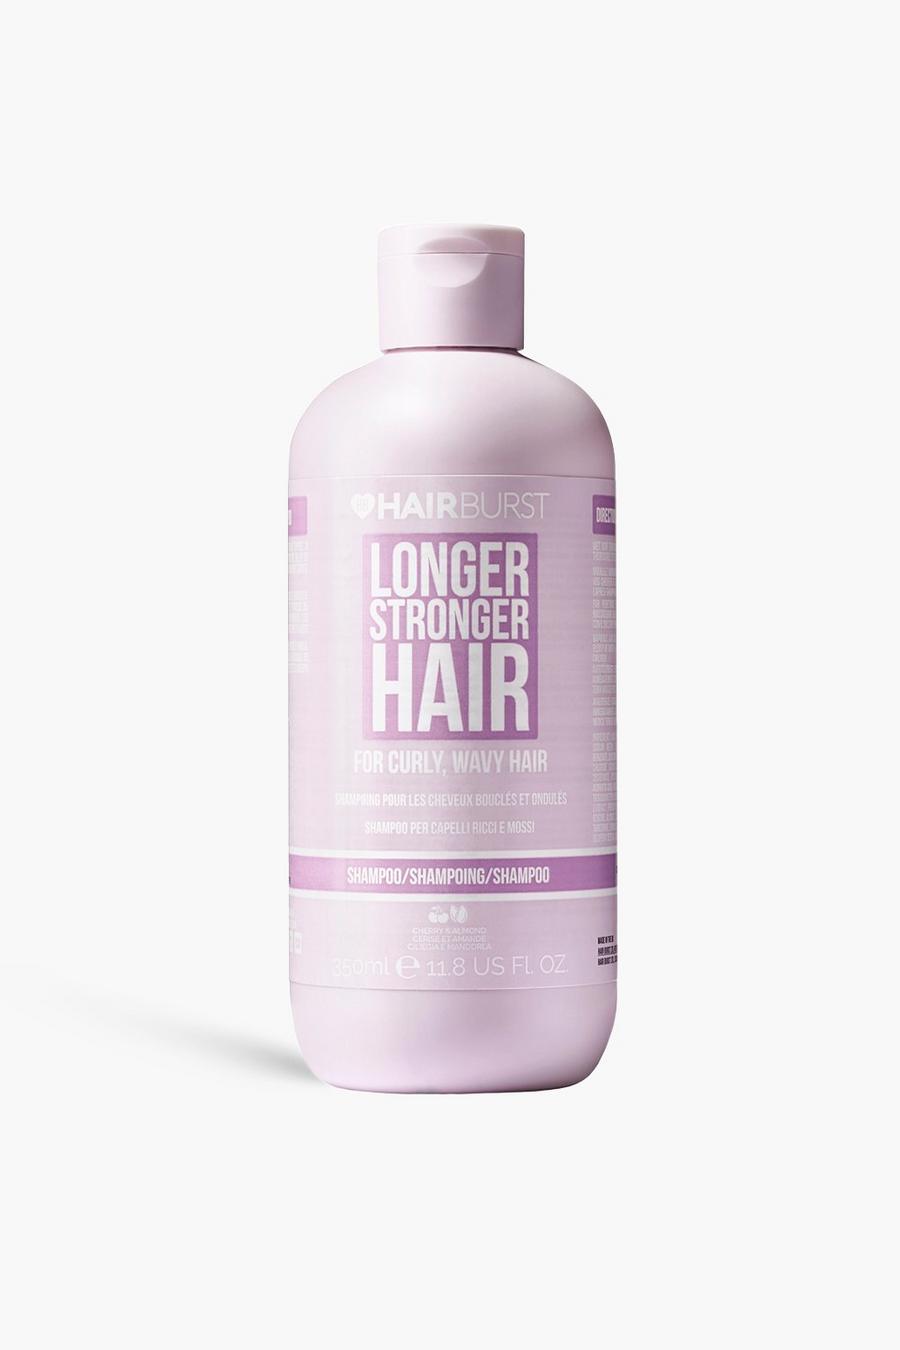 Hairburst Shampoo for Curly, Wavy Hair 350ml | Boohoo UK